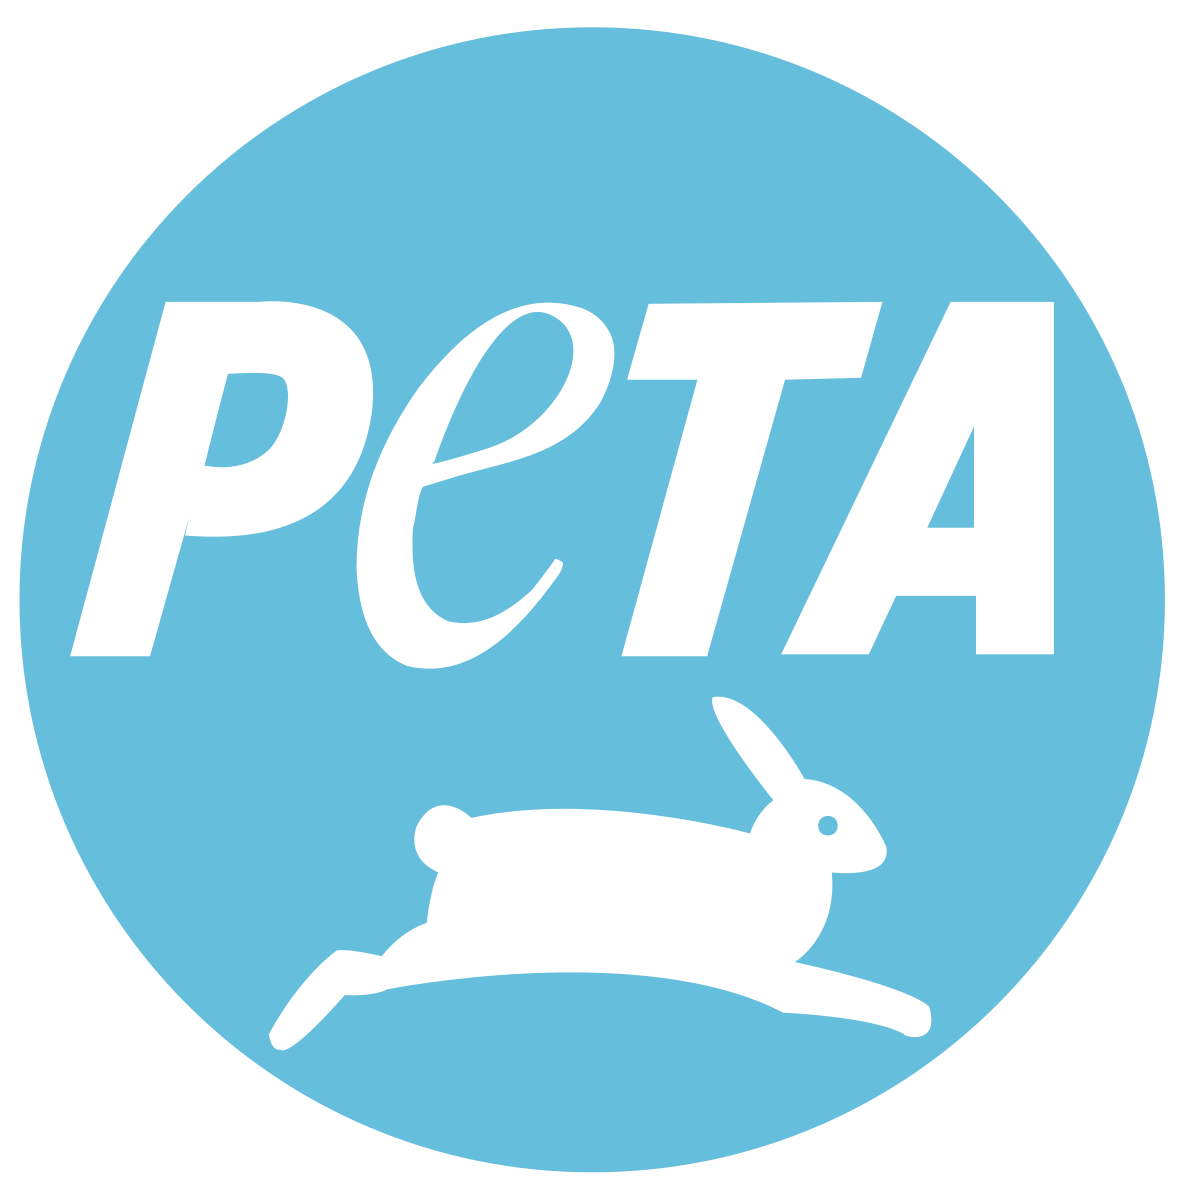 Business logo of PETA